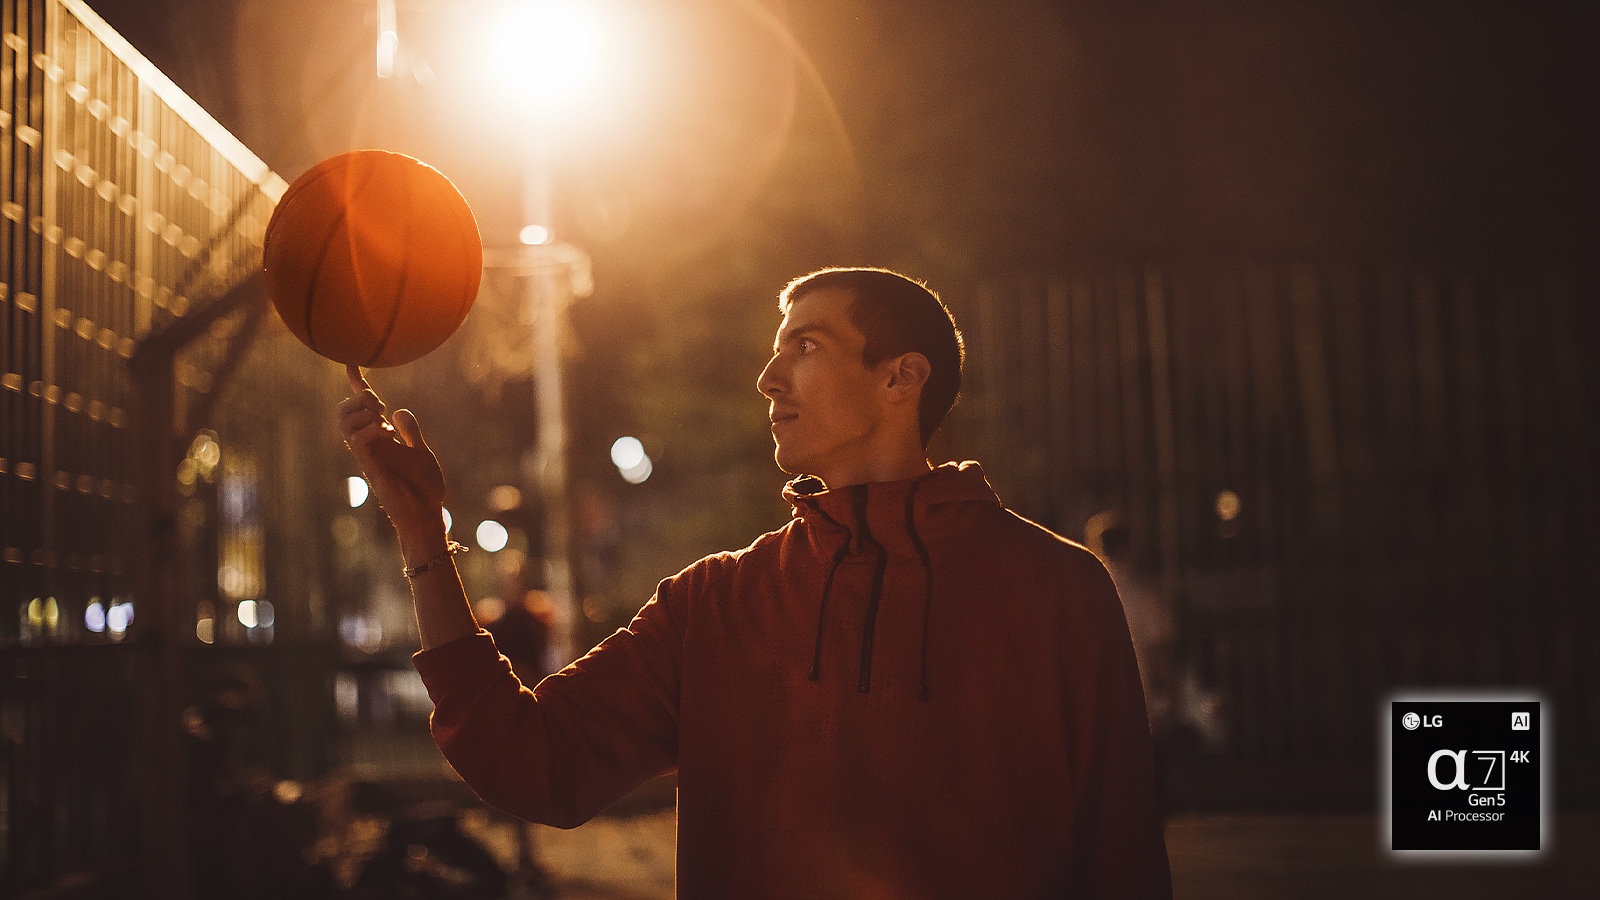 Muškarac na košarkaškom terenu noću vrti košarkašku loptu na vrhu prsta.